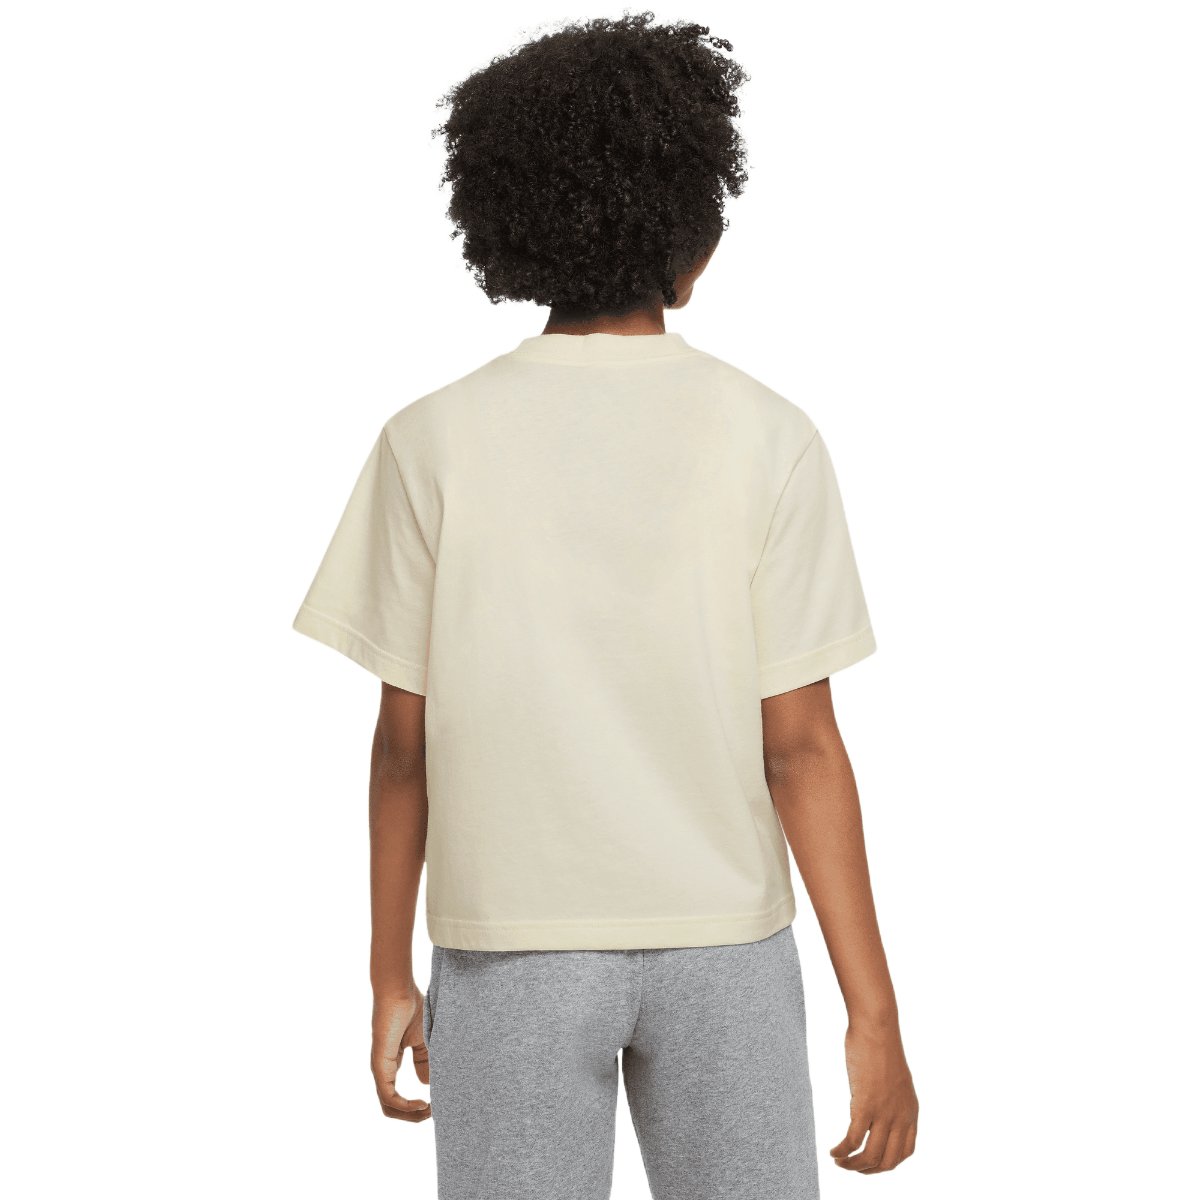 Nike Sportswear T-Shirt - Youth | Sport-T-Shirts